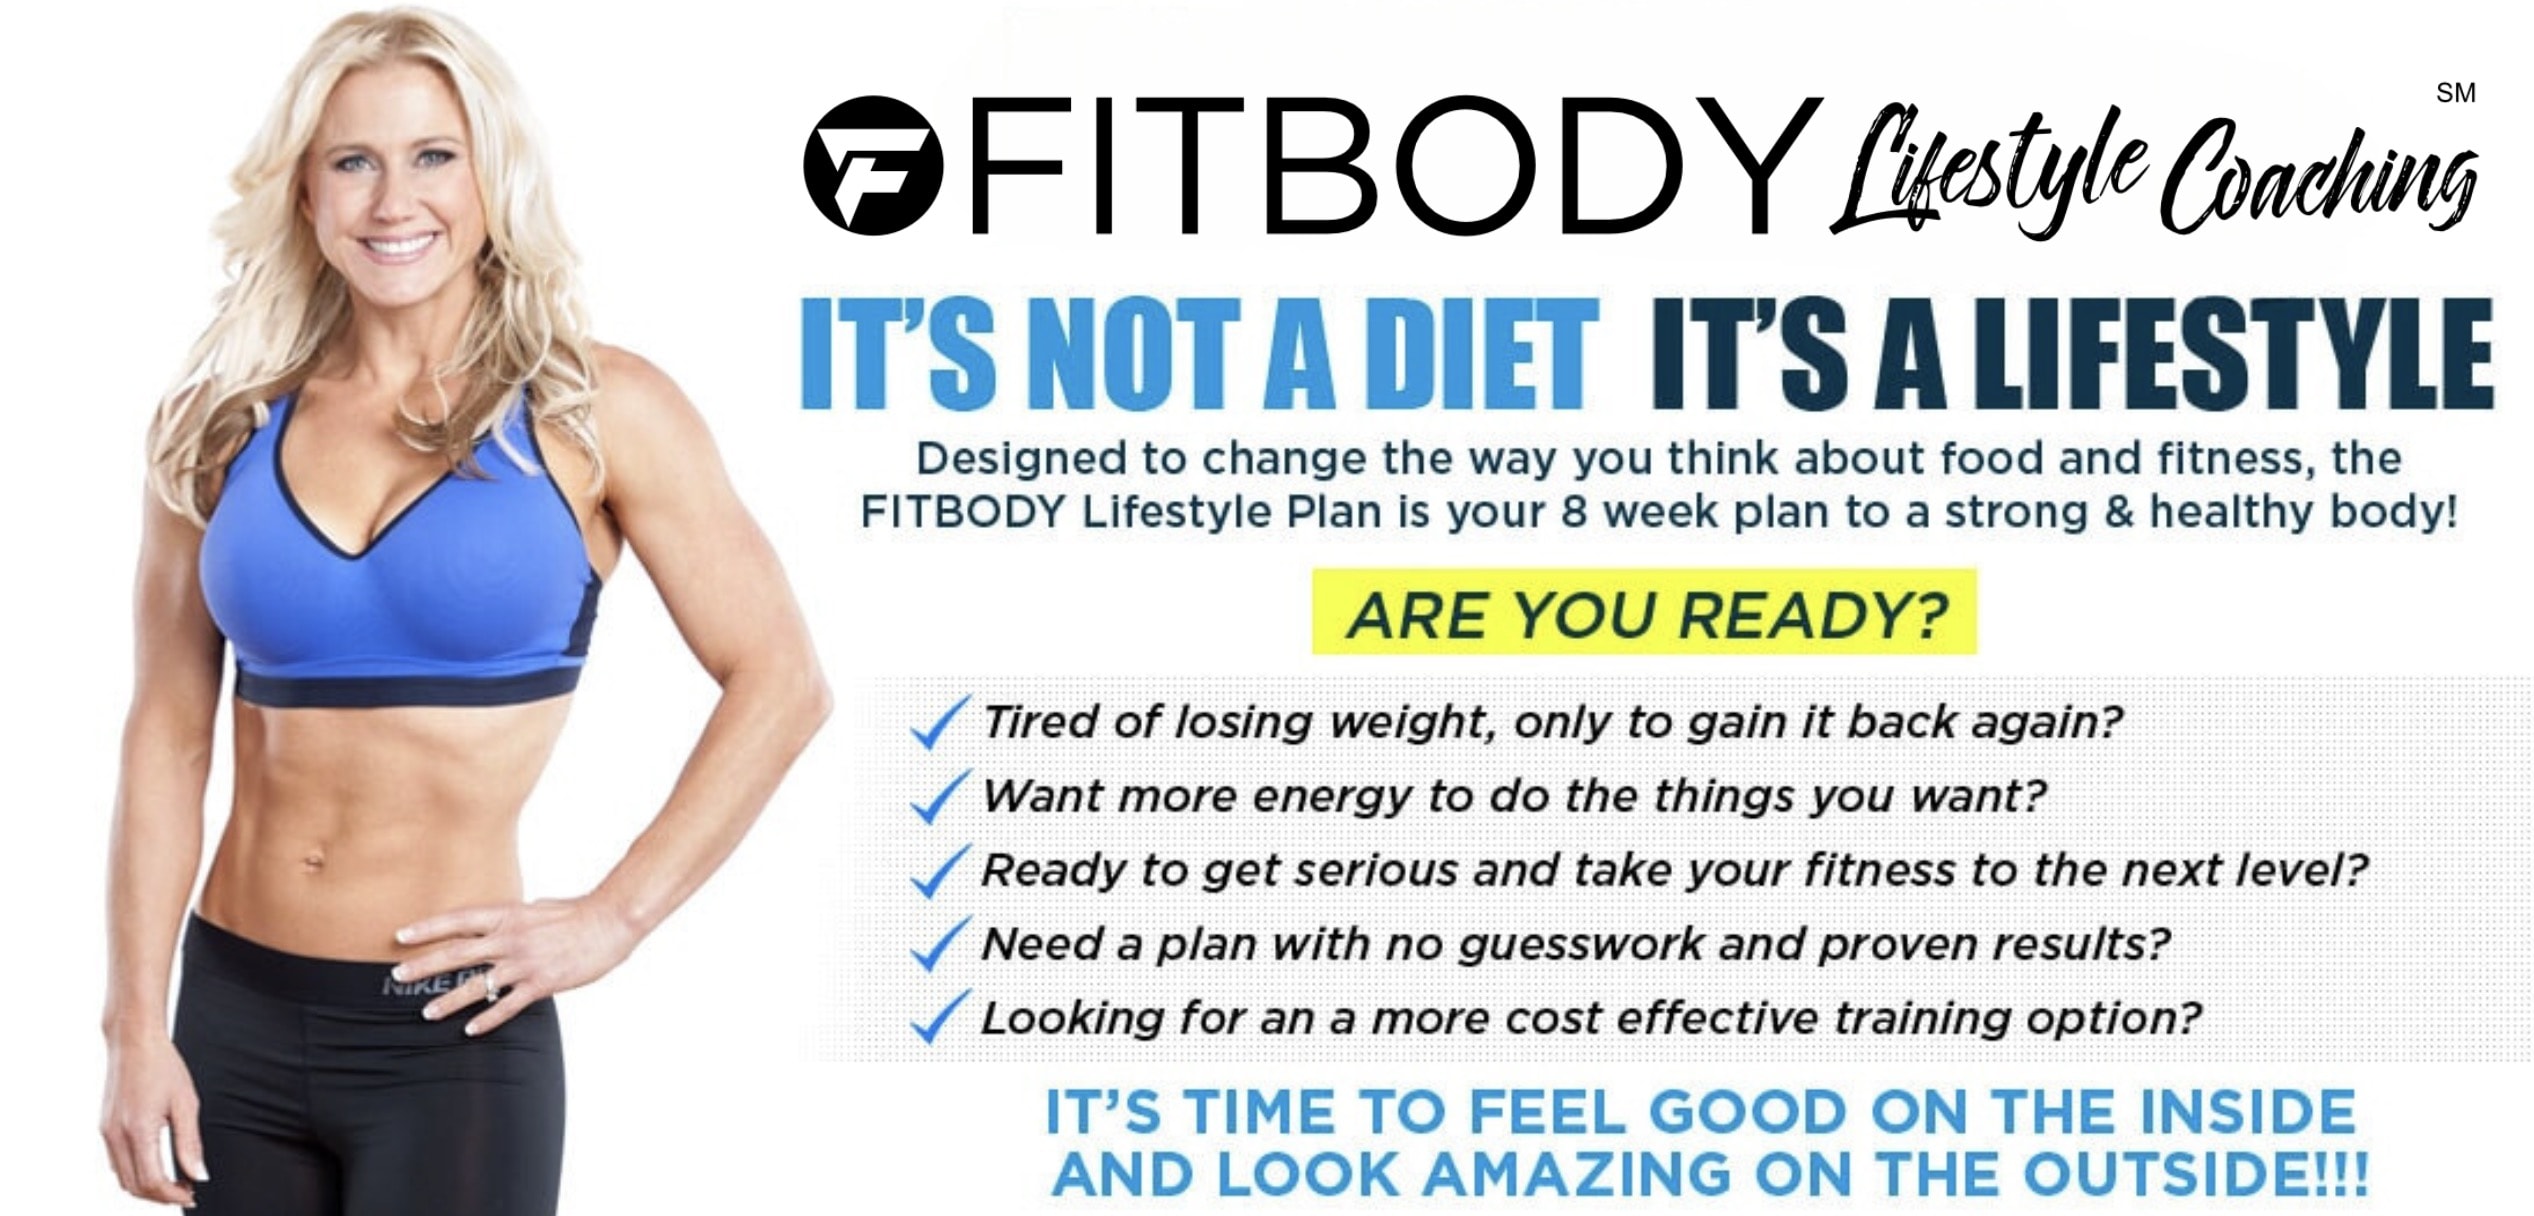 Fitbody Lifestyle Workout Plan for Women